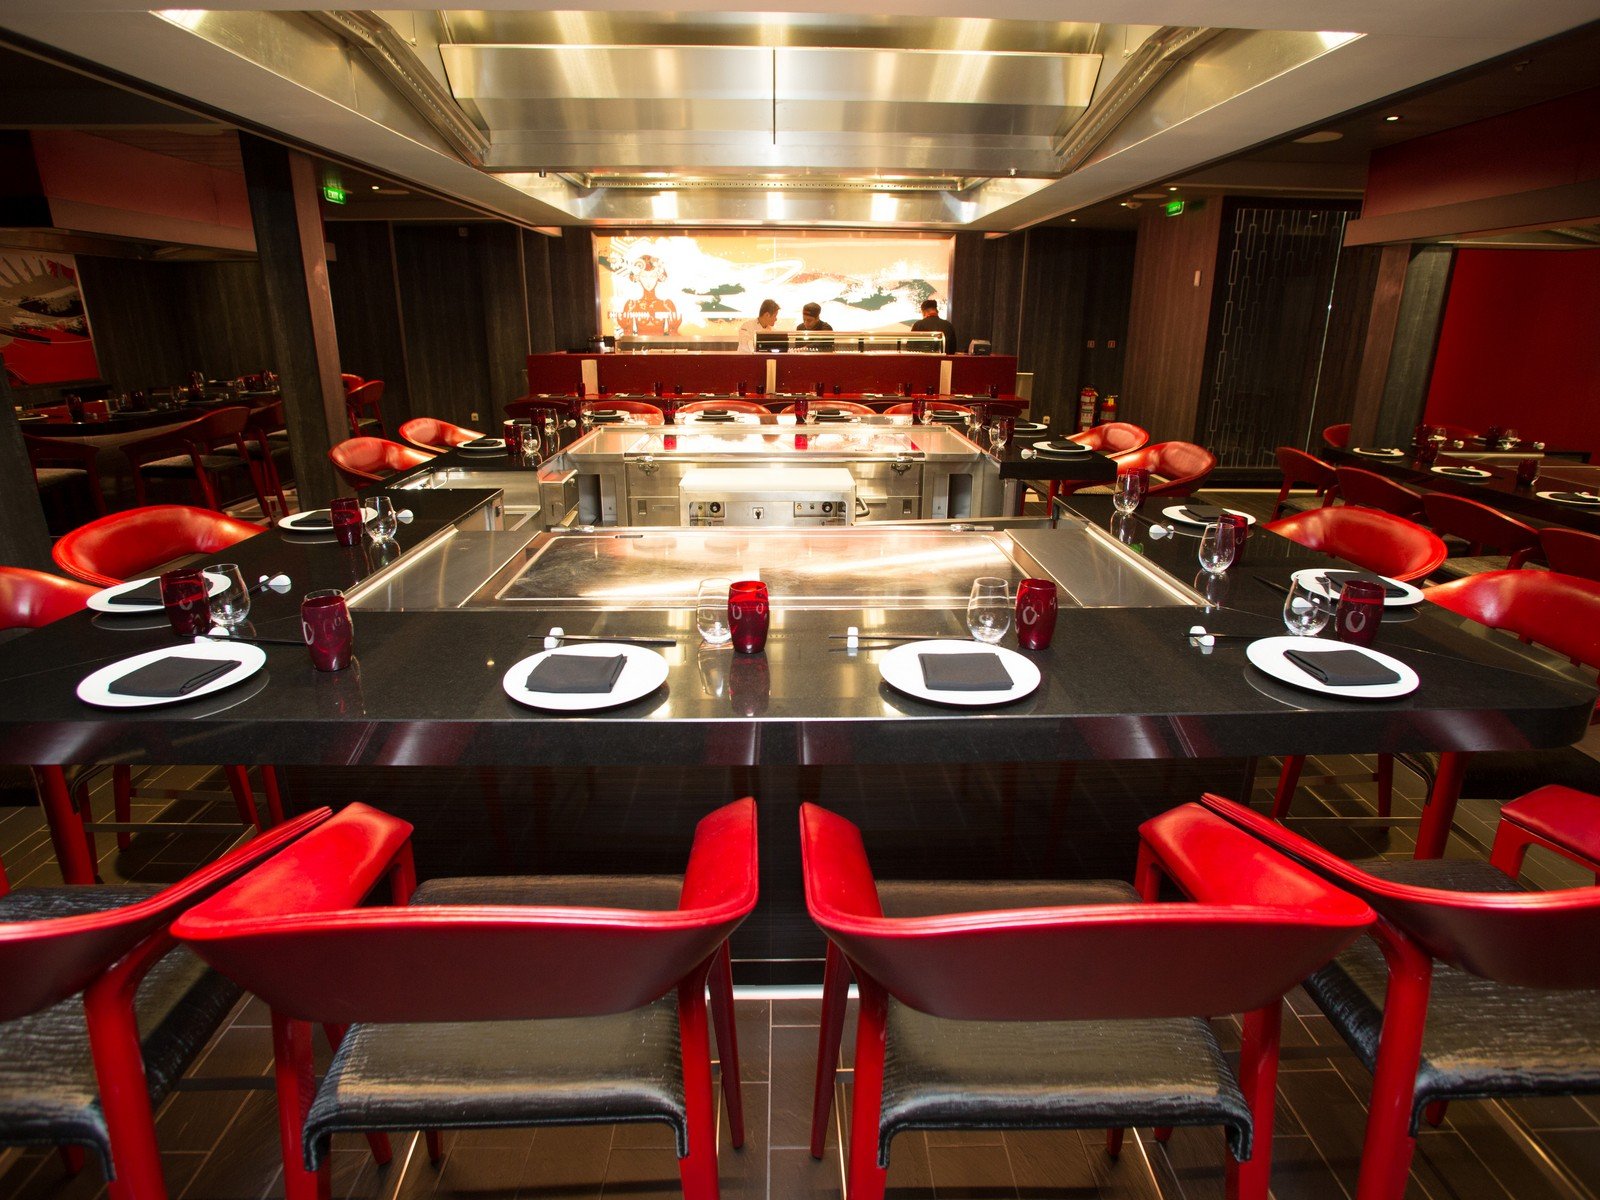 Japanese hibachi restaurant confirmed for Wonder of the Seas cruise ship | Royal Caribbean Blog